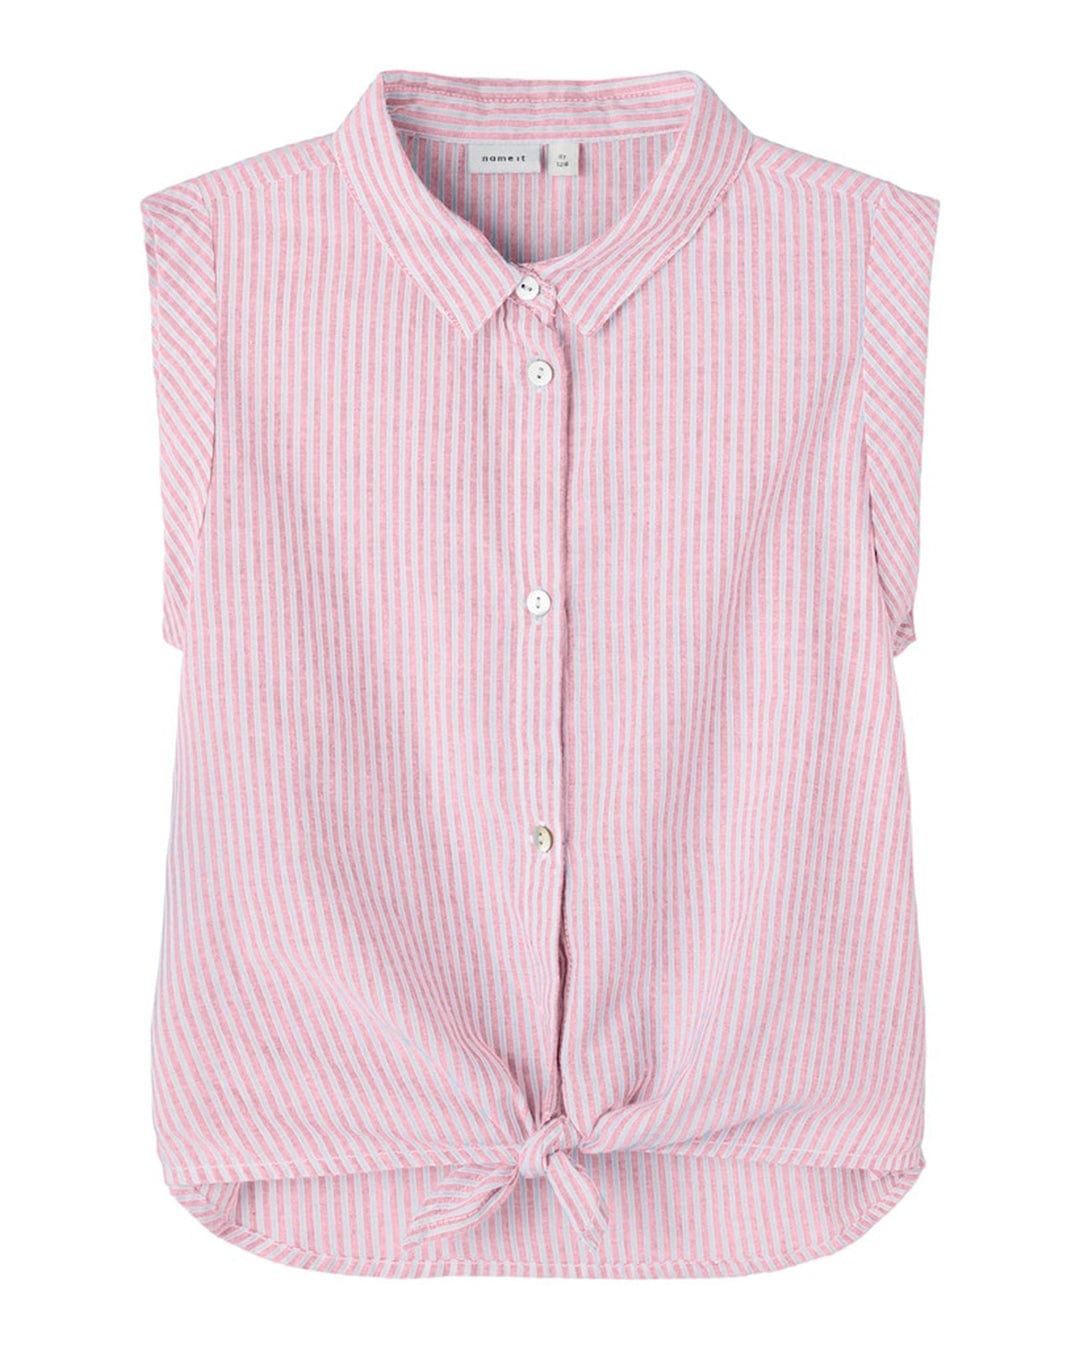 Name It Shirts Girls Name It Femma Capsule Pink Shirt